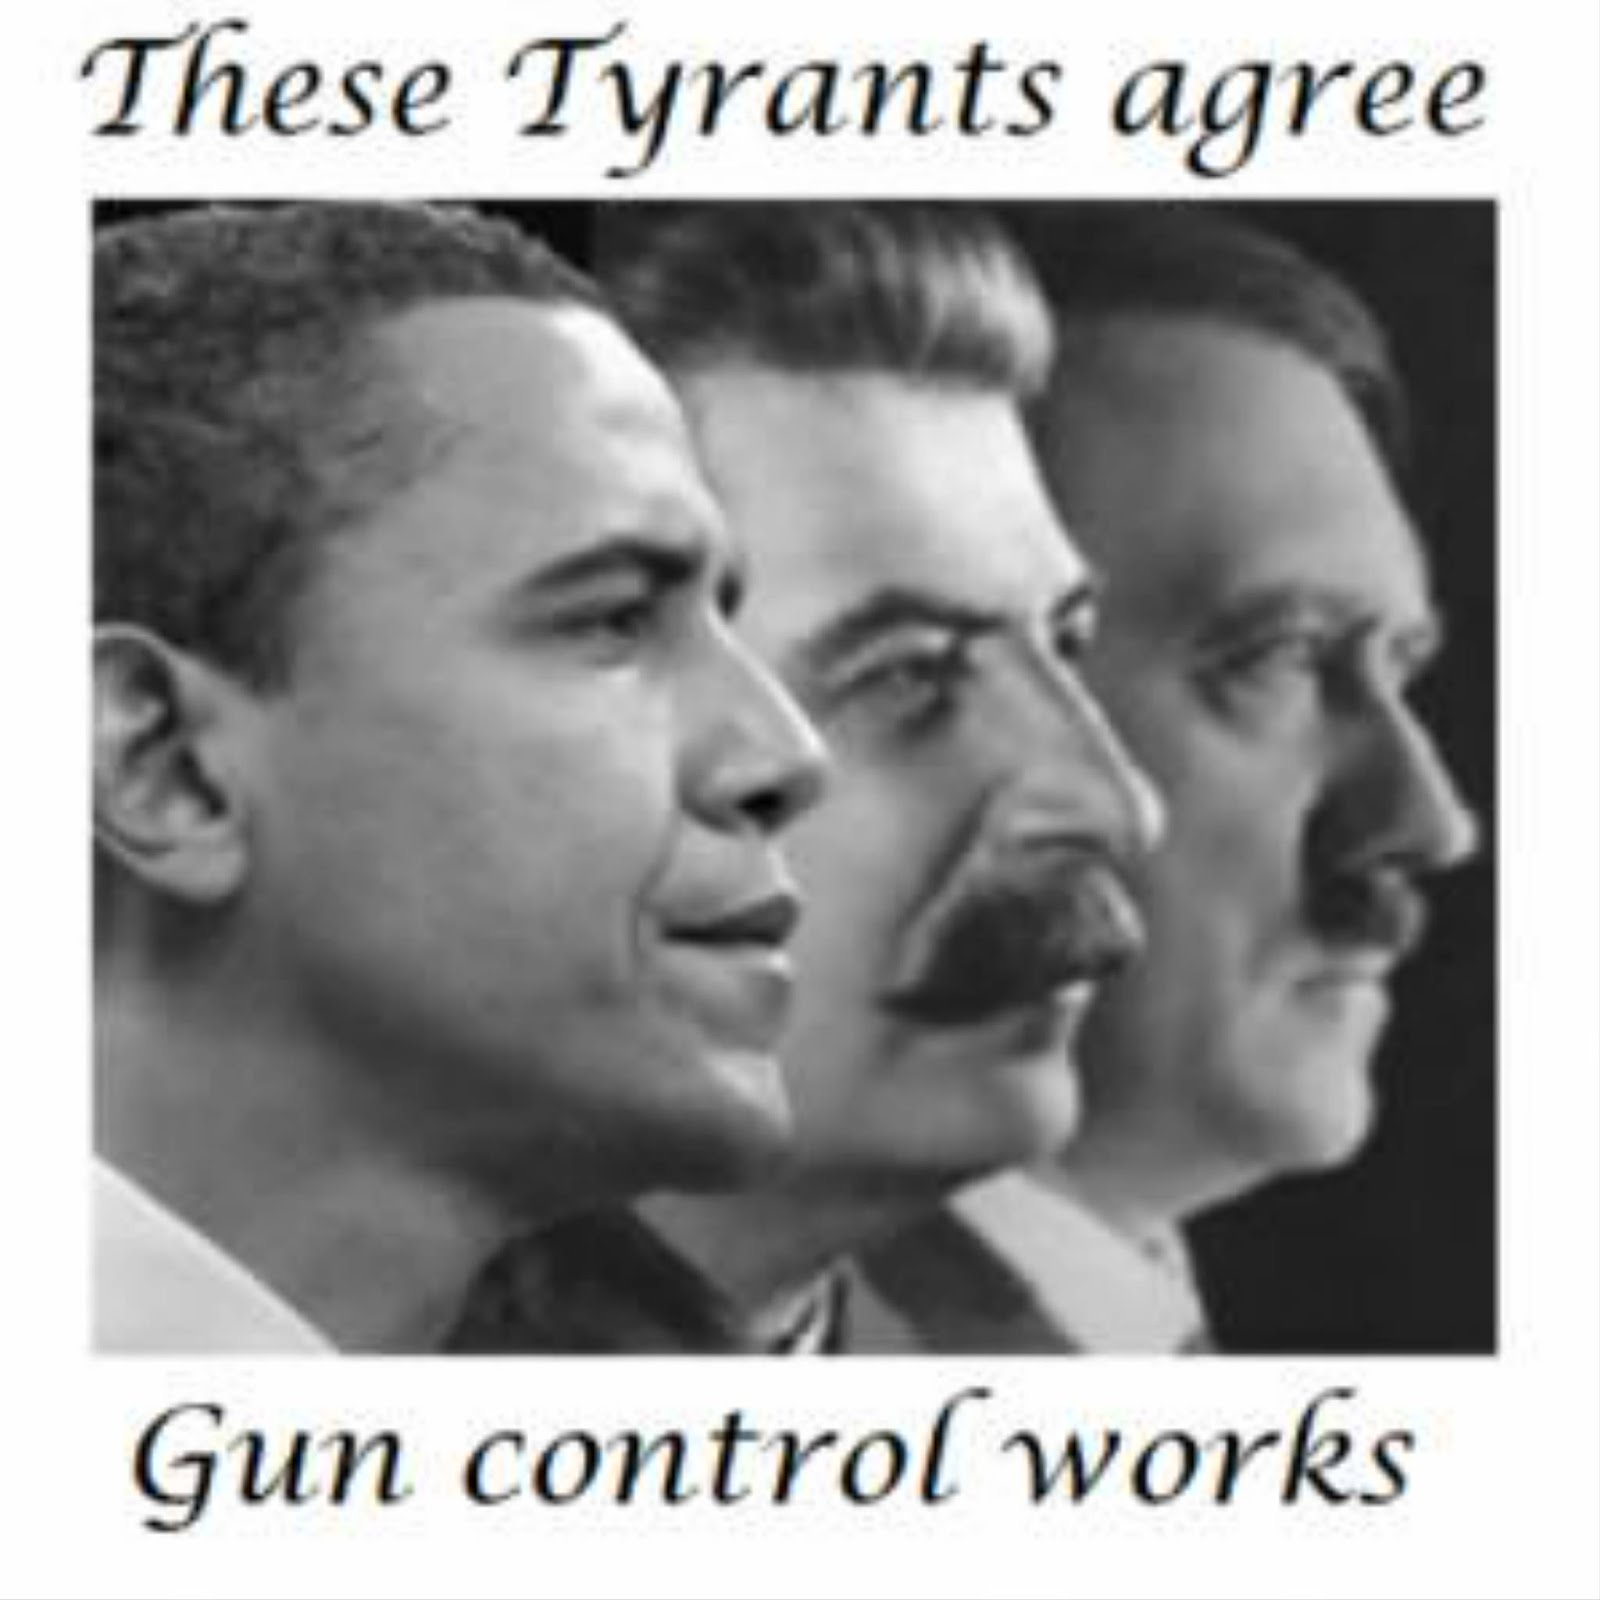 http://4.bp.blogspot.com/-r4WhEaLz-wc/UOxkK9kW8iI/AAAAAAAAOsM/p6gSUZyAIV4/s1600/tyrants-gun-control-1-719356.jpg